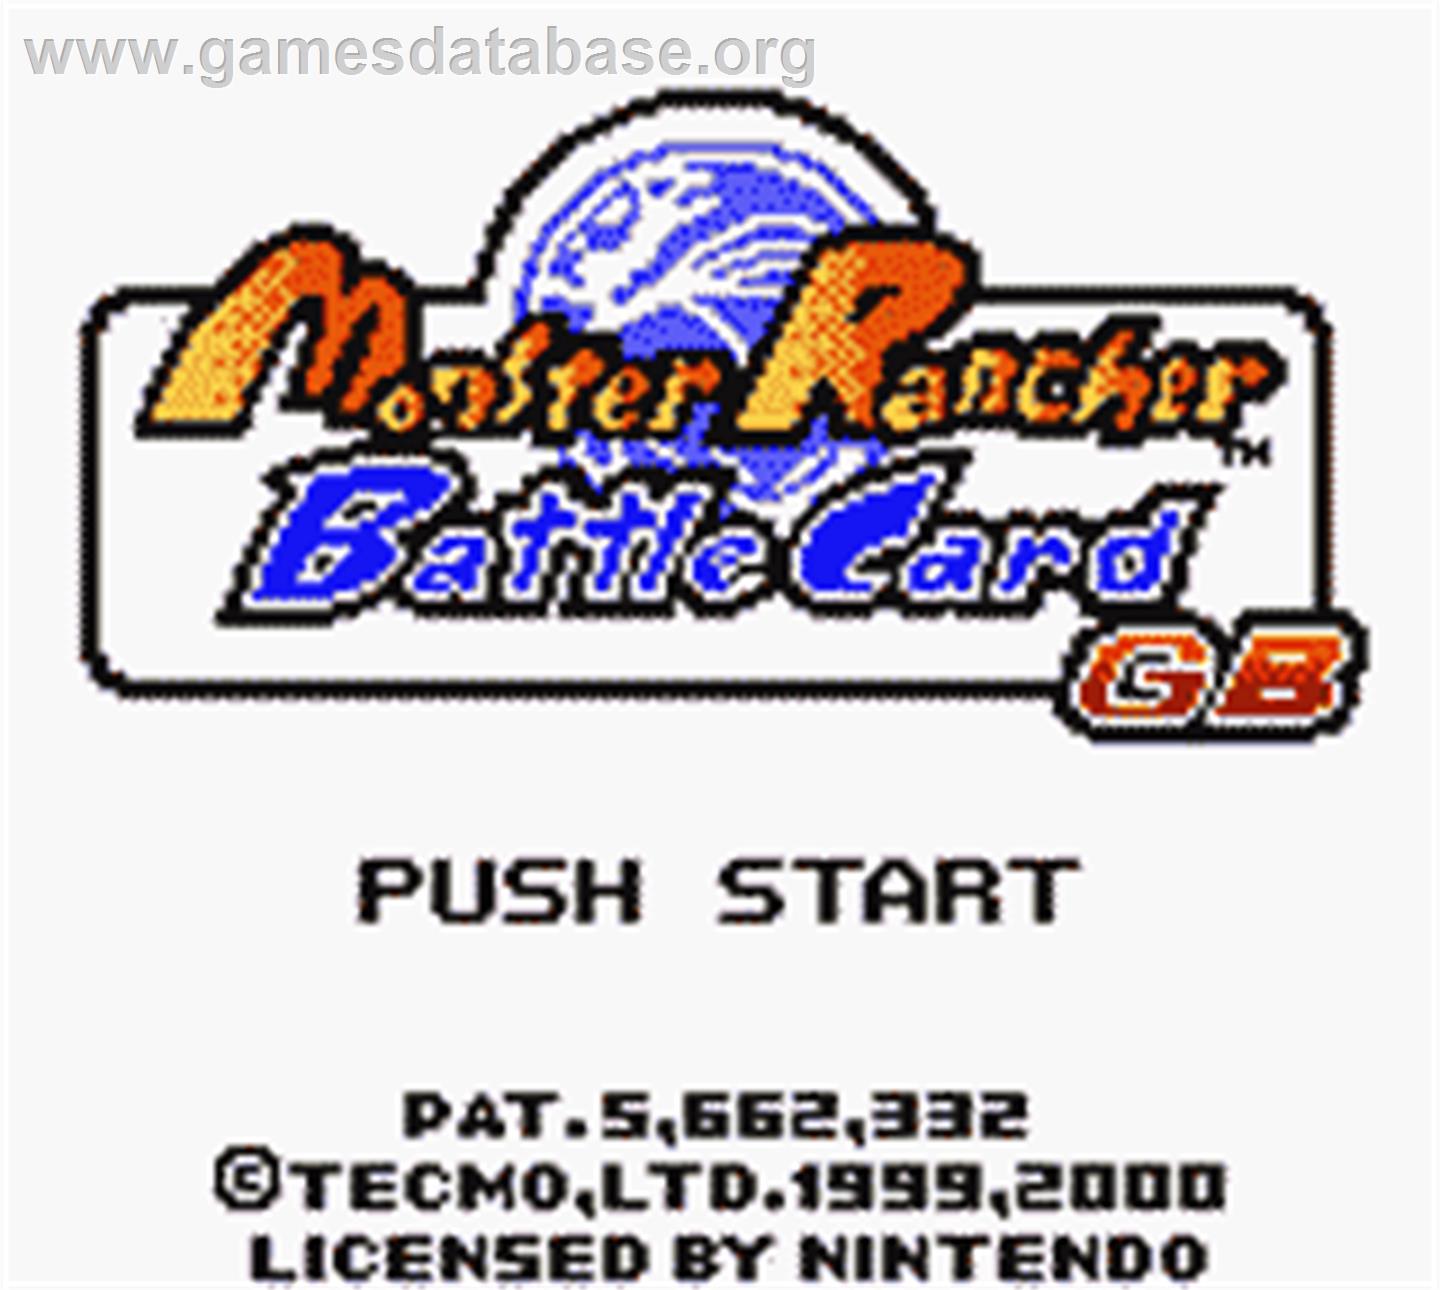 Monster Rancher BattleCard GB - Nintendo Game Boy Color - Artwork - Title Screen